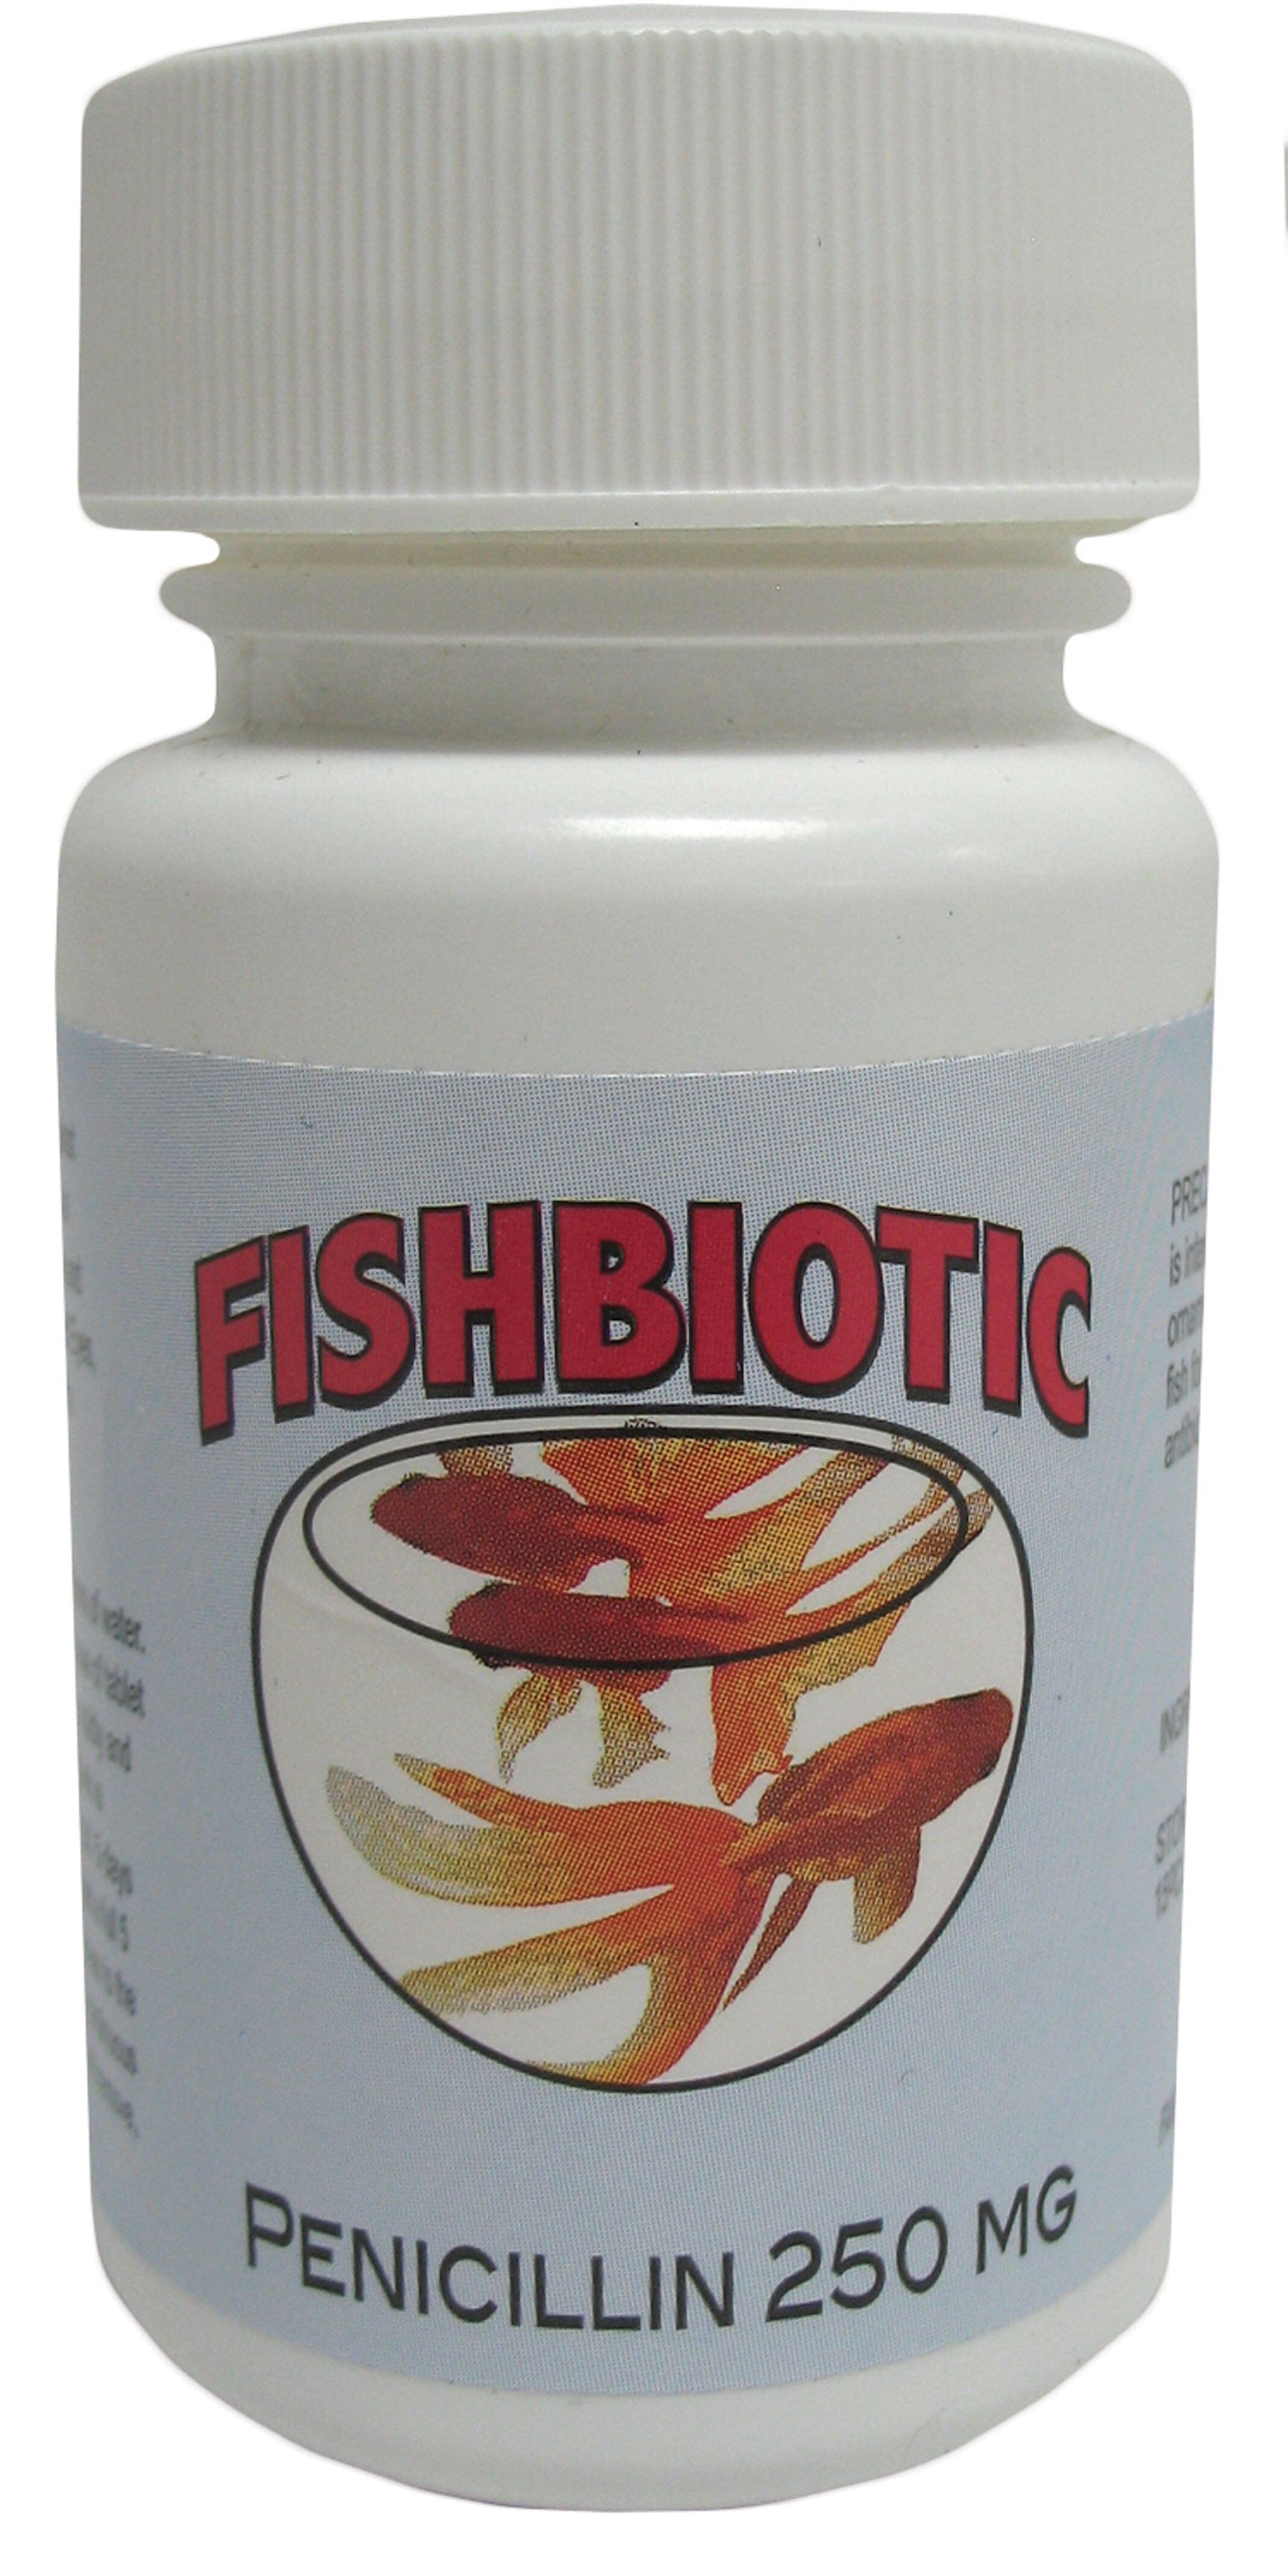 Fishbiotic Fishbiotic Penicillin Tablets Fish Medication - 250 Mg - 60 Count  